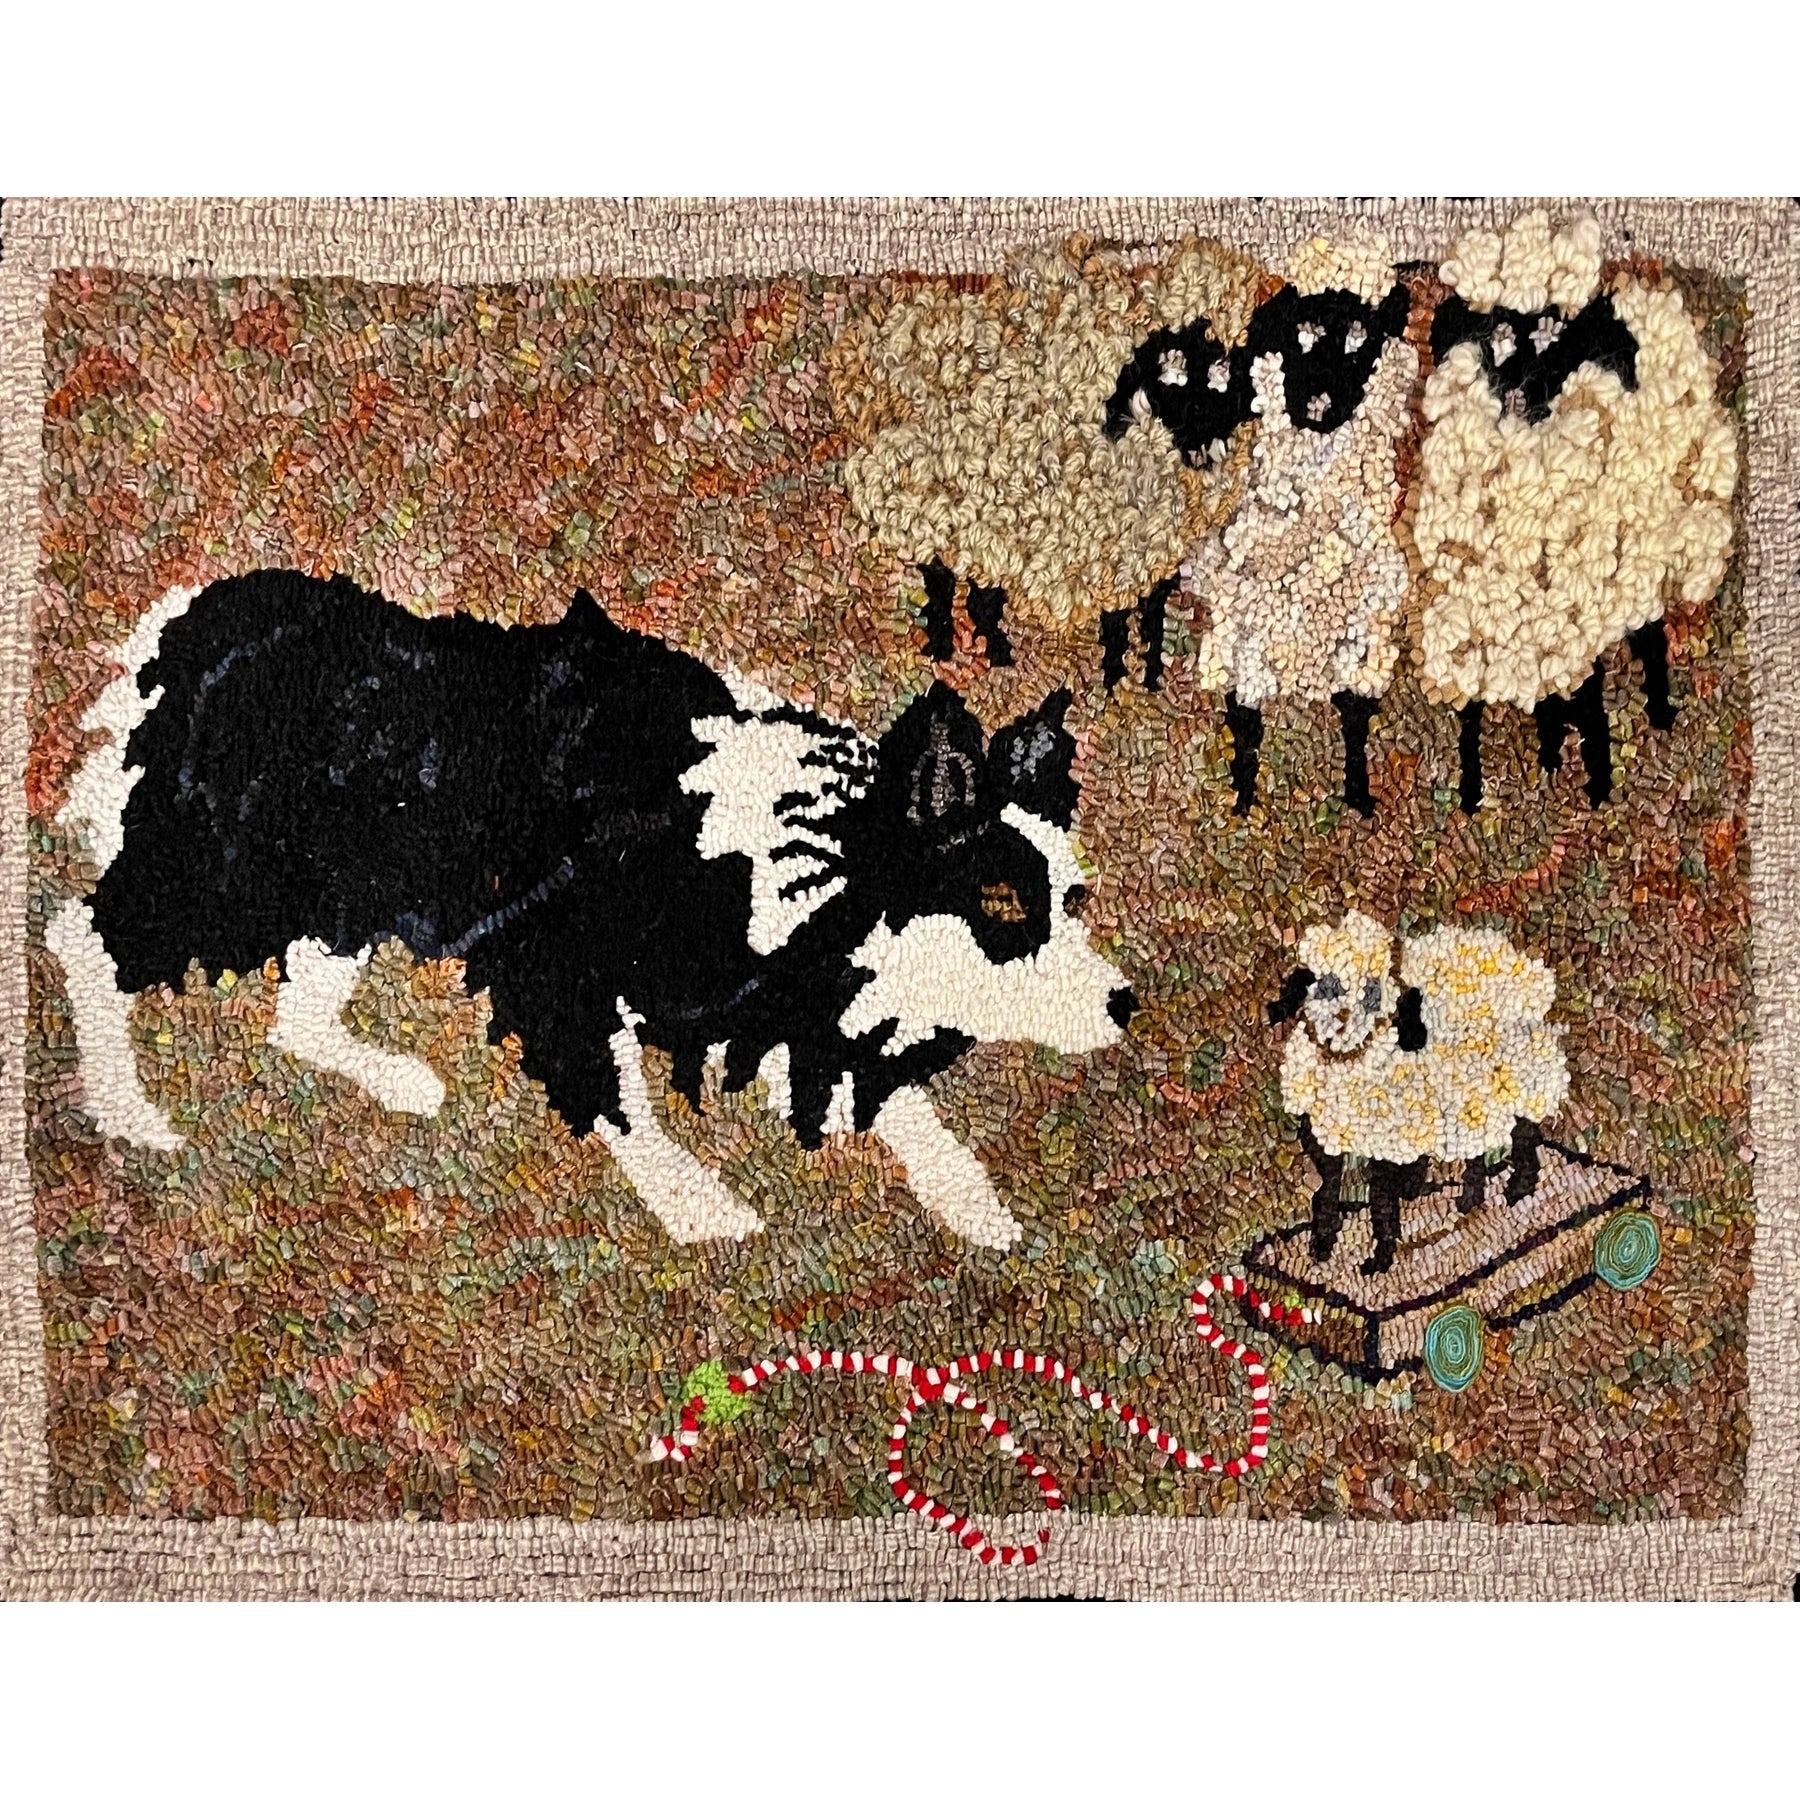 Dog on Duty, rug hooked by Judy Peluso